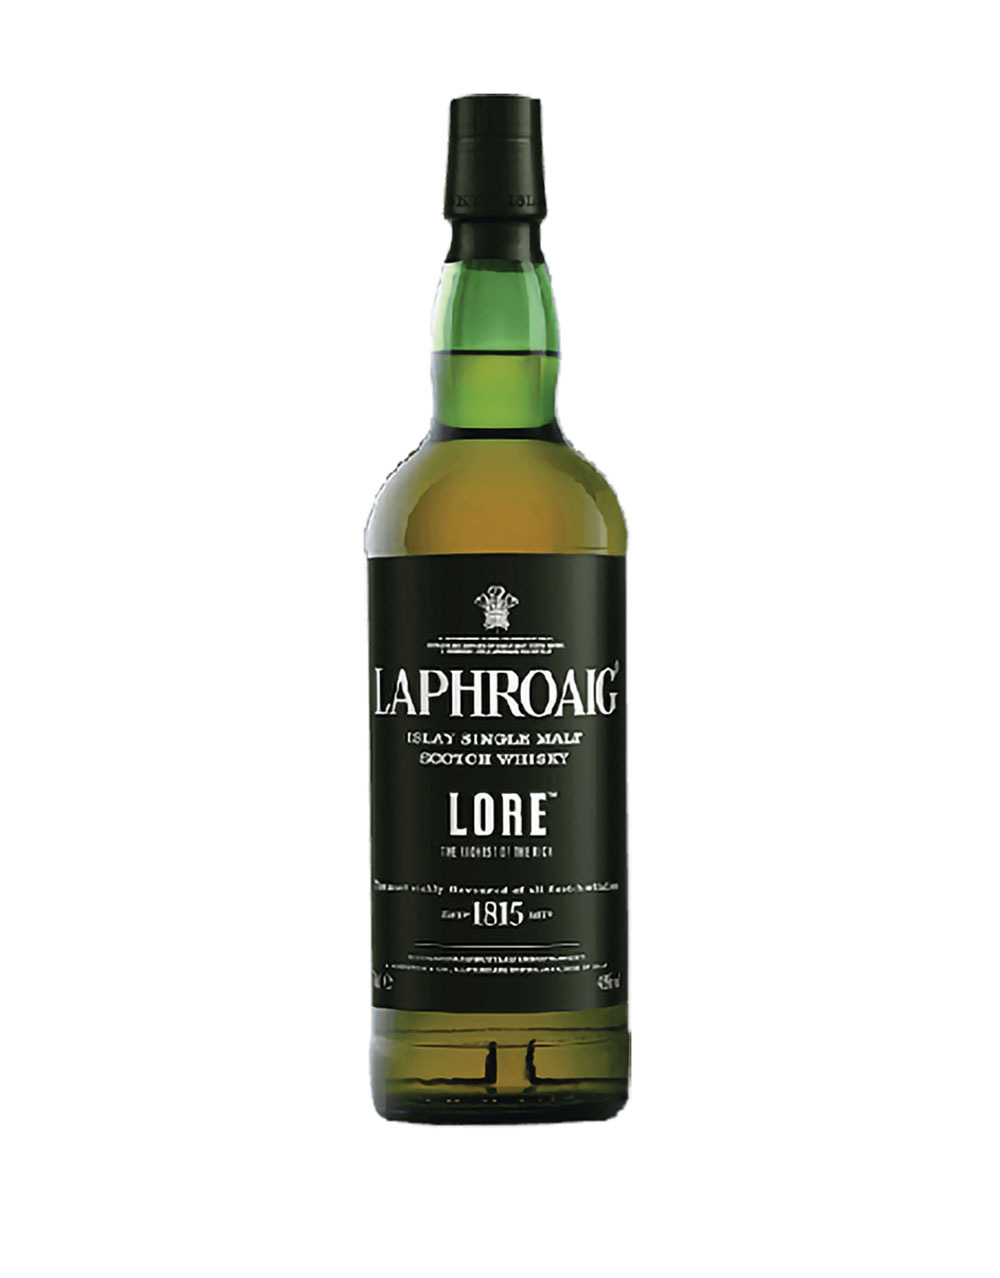 Laphroaig Lore Single Malt Scotch Whisky